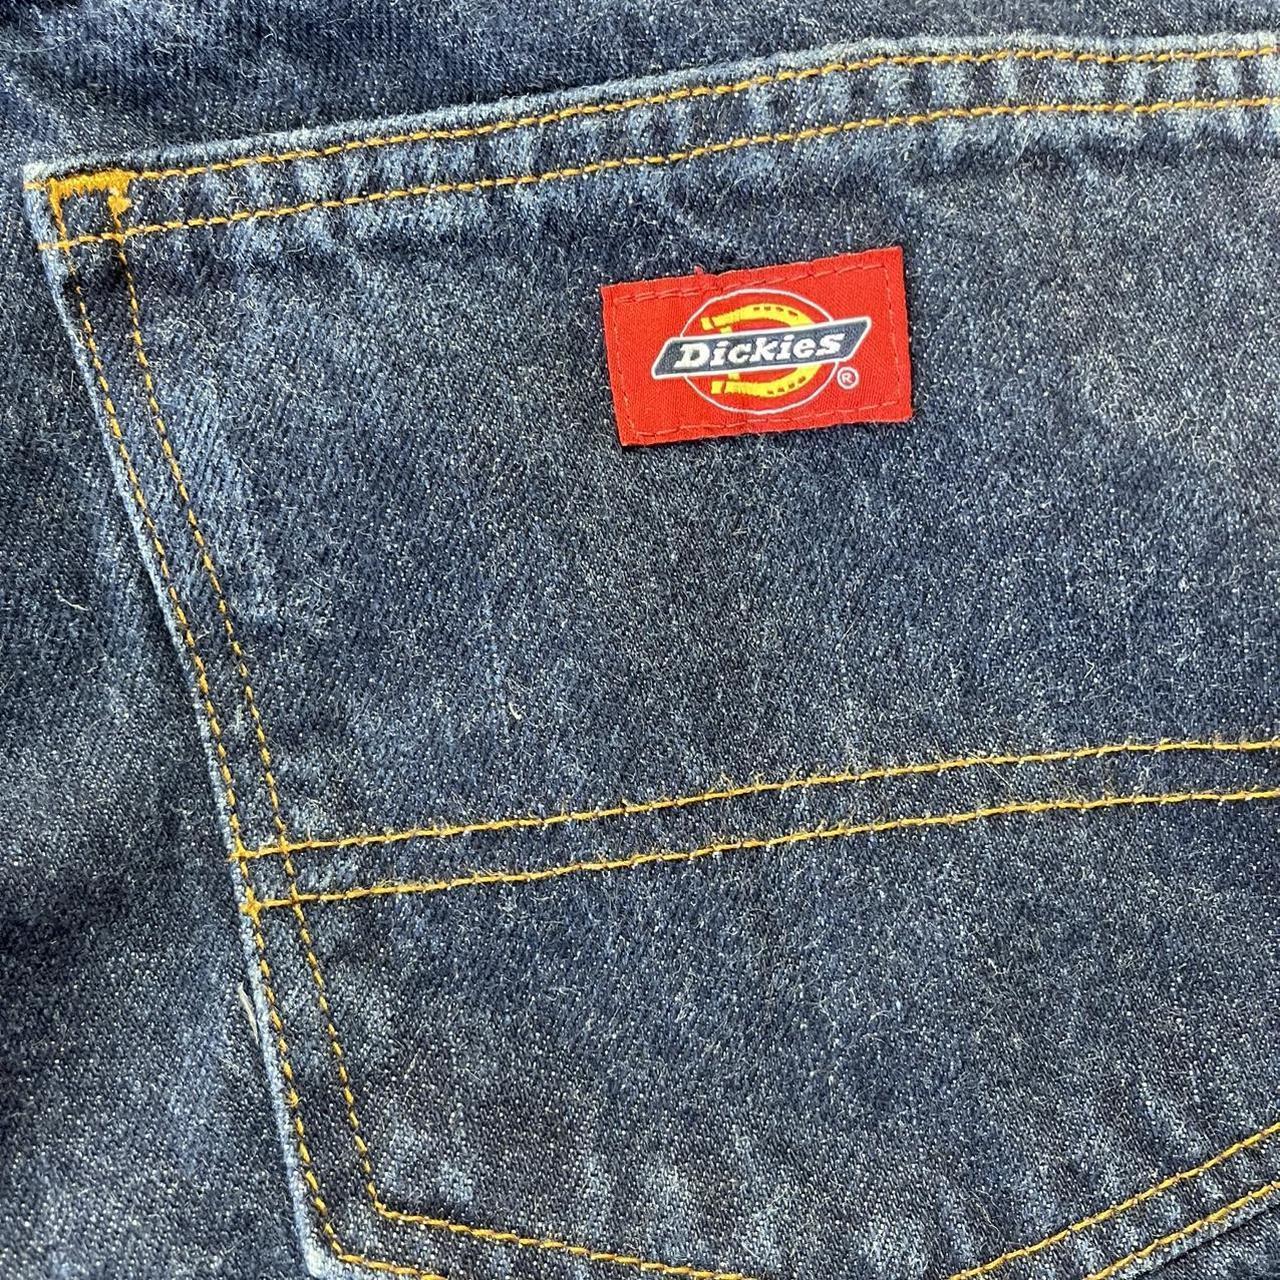 Product Image 3 - Dickies work pants denim jeans
Mens